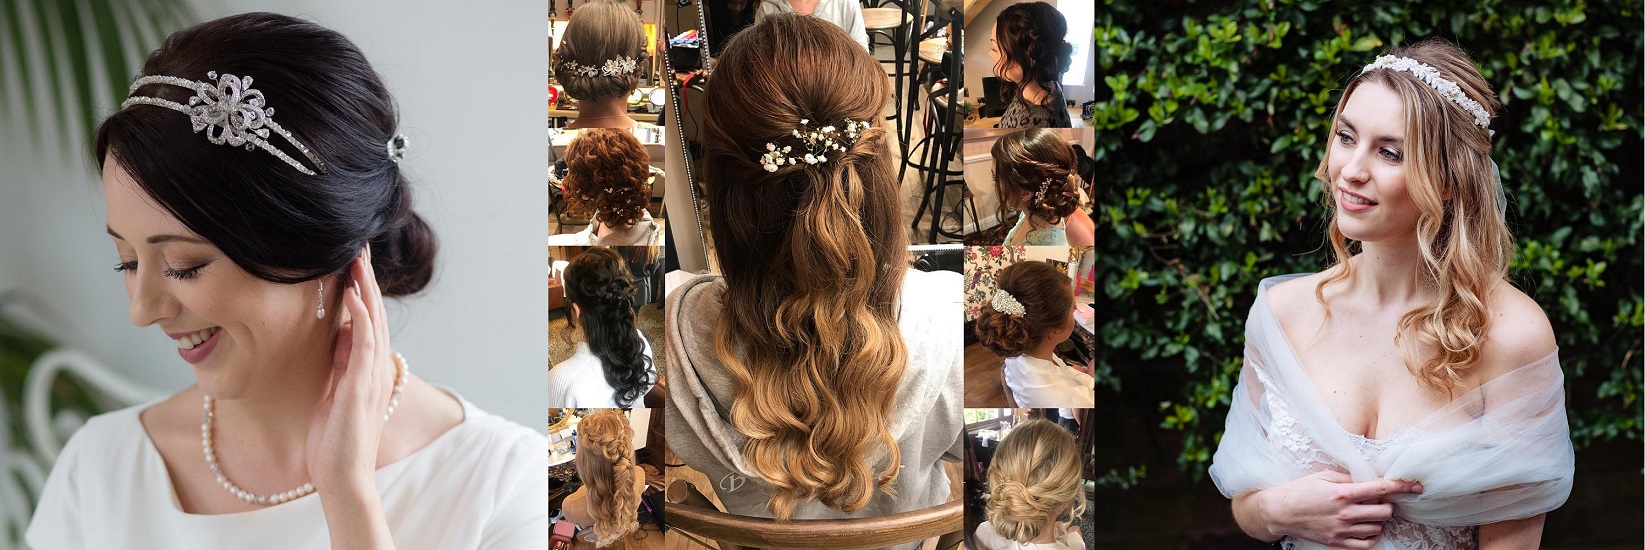 Bridal Hair & Make Up